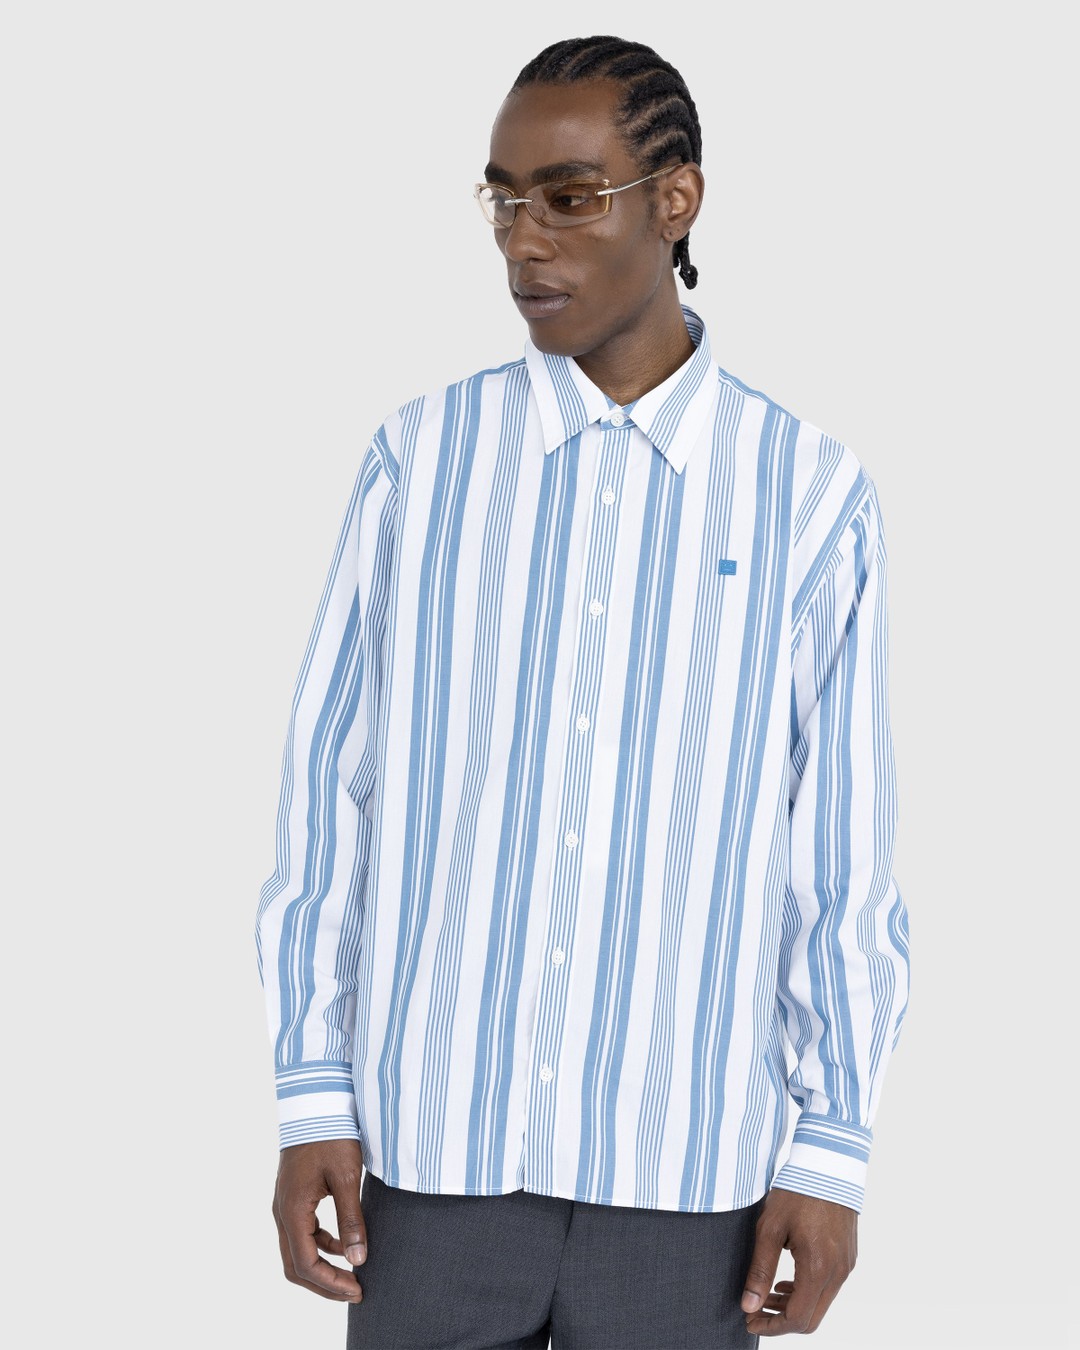 Acne Studios – Stripe Button-Up Shirt White/Steel Blue - Shirts - White - Image 2